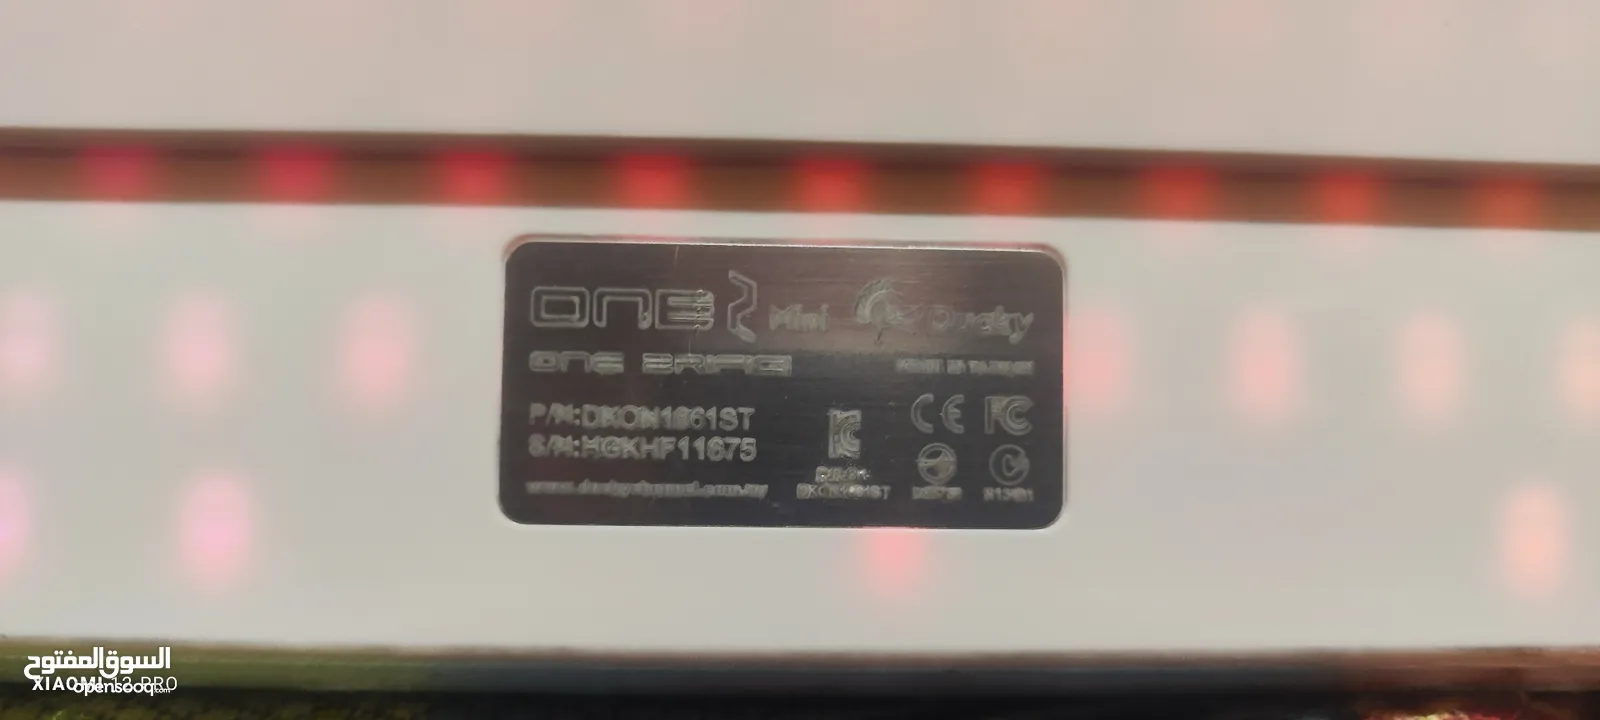 Asus Rog Strix Z370-F Gaming , i7 8700 , Ducky one 2 mini